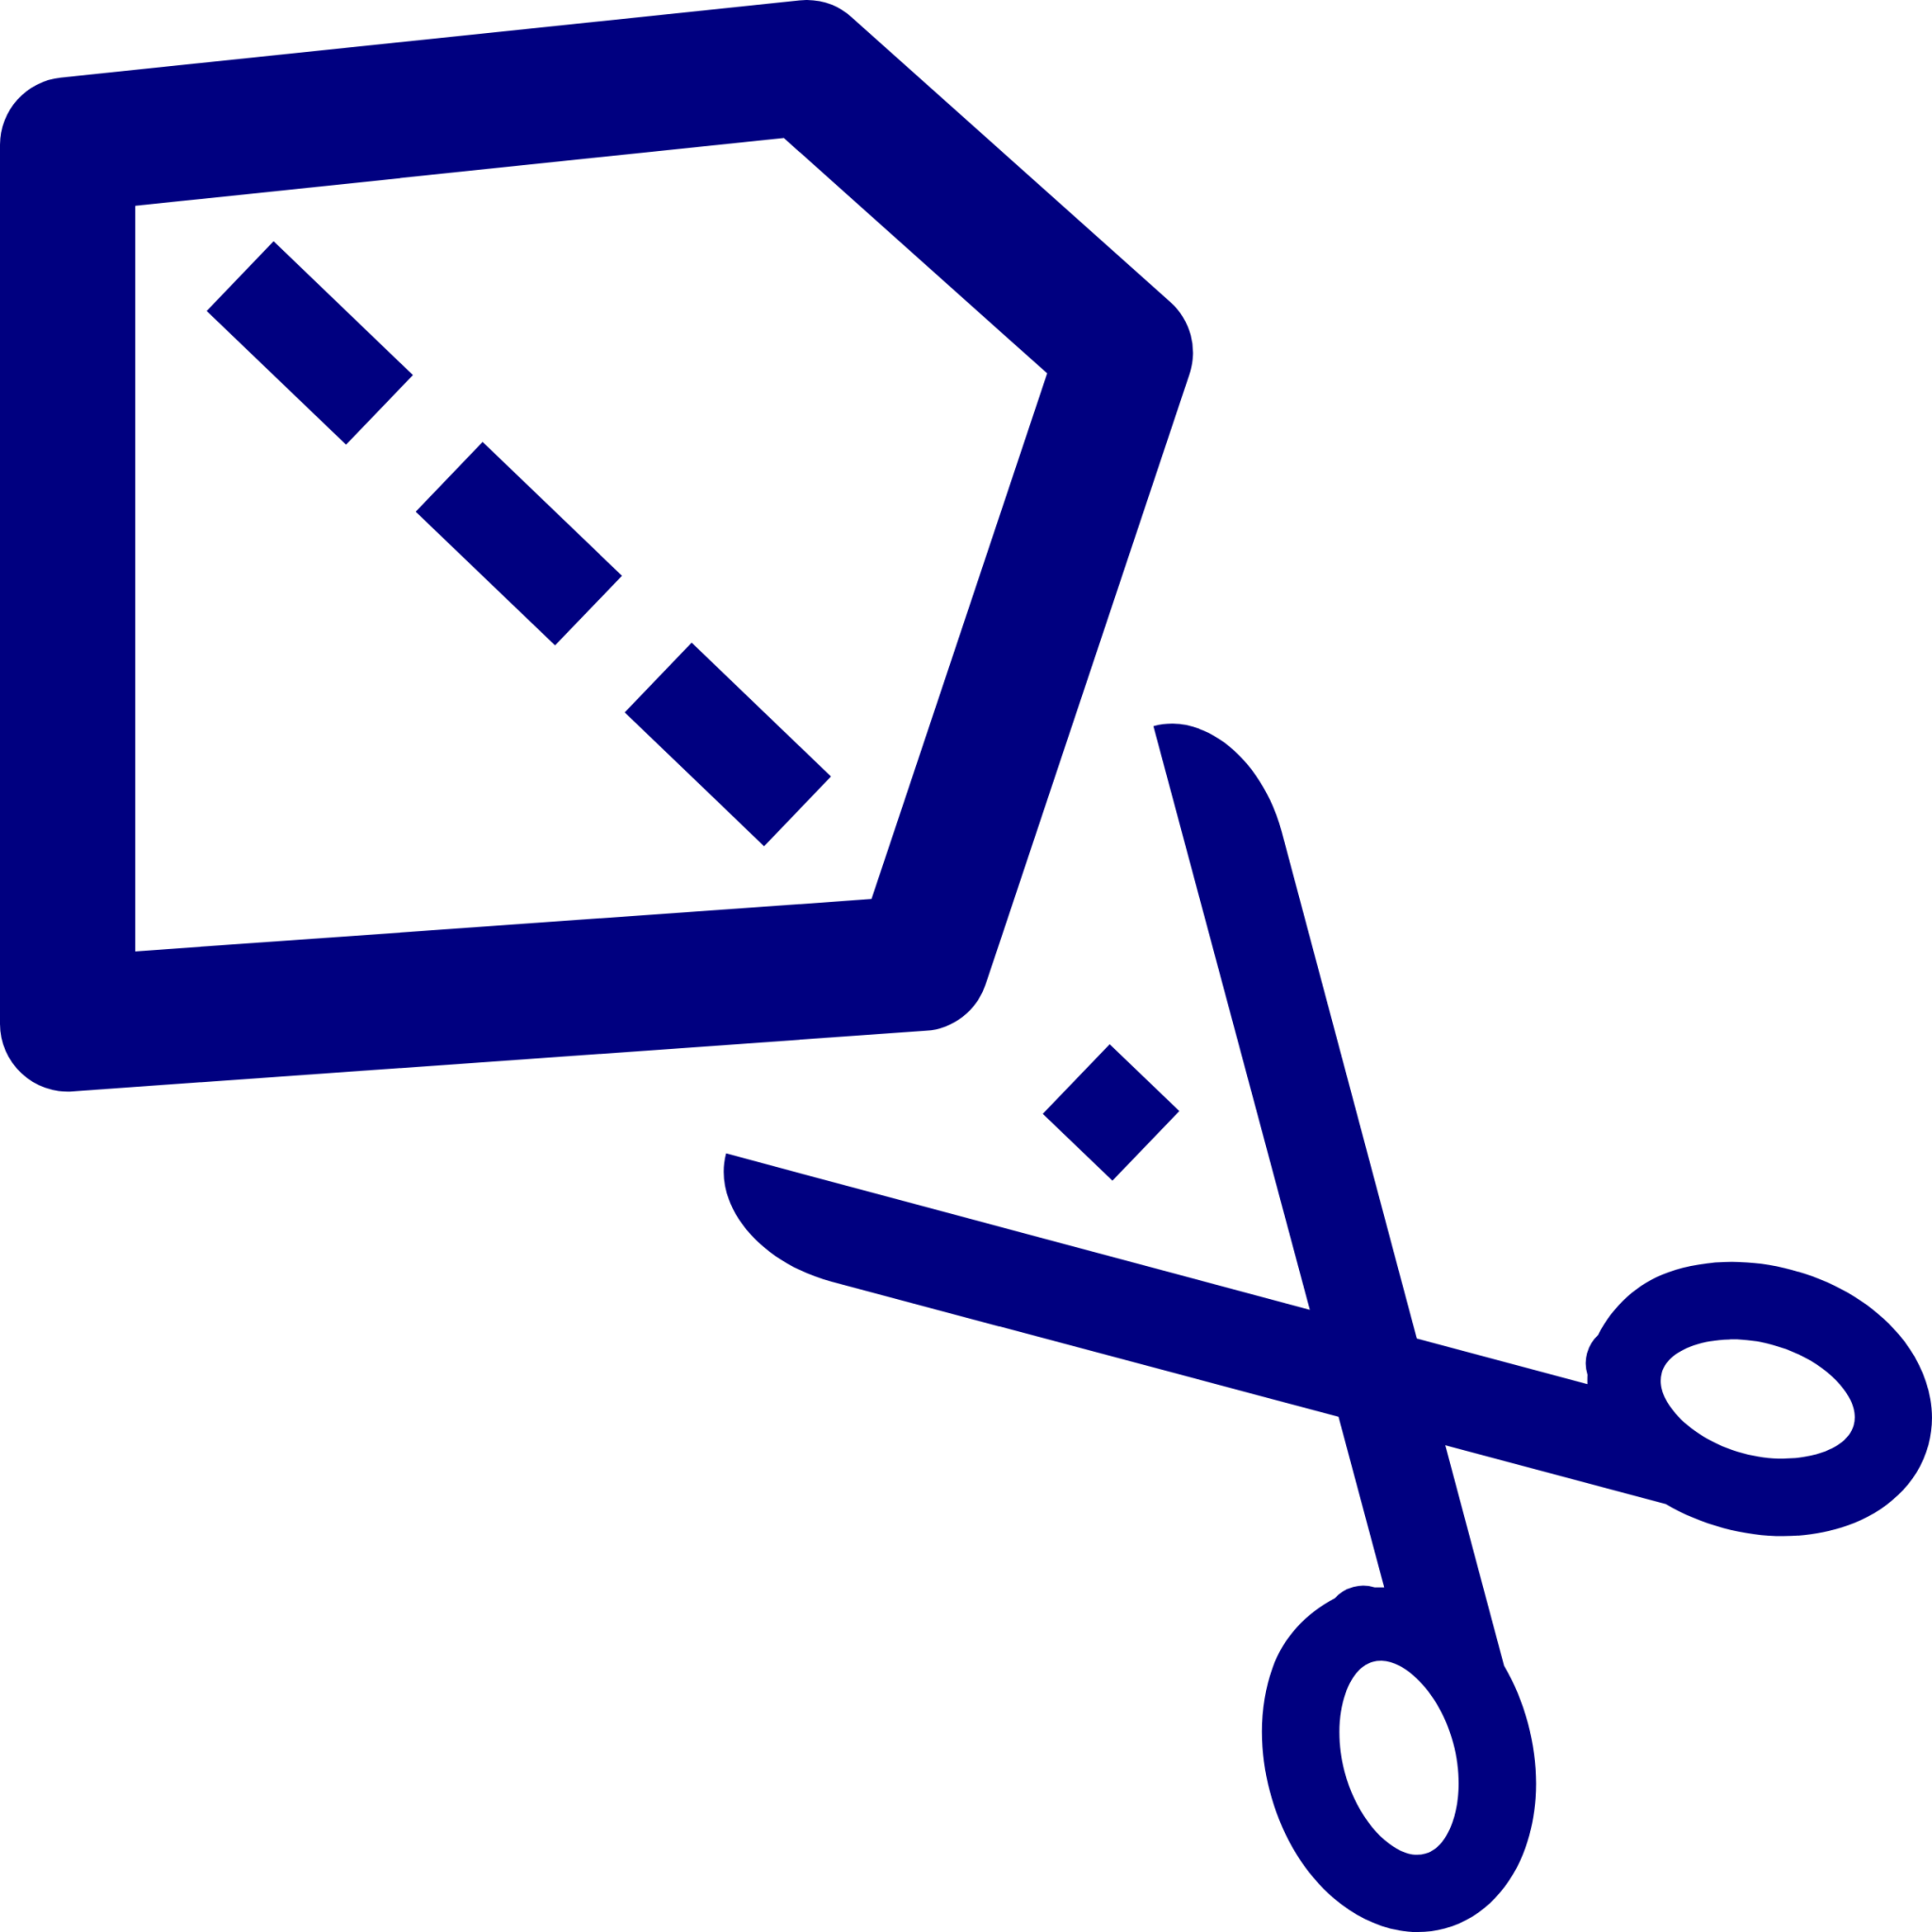 split polygon icon